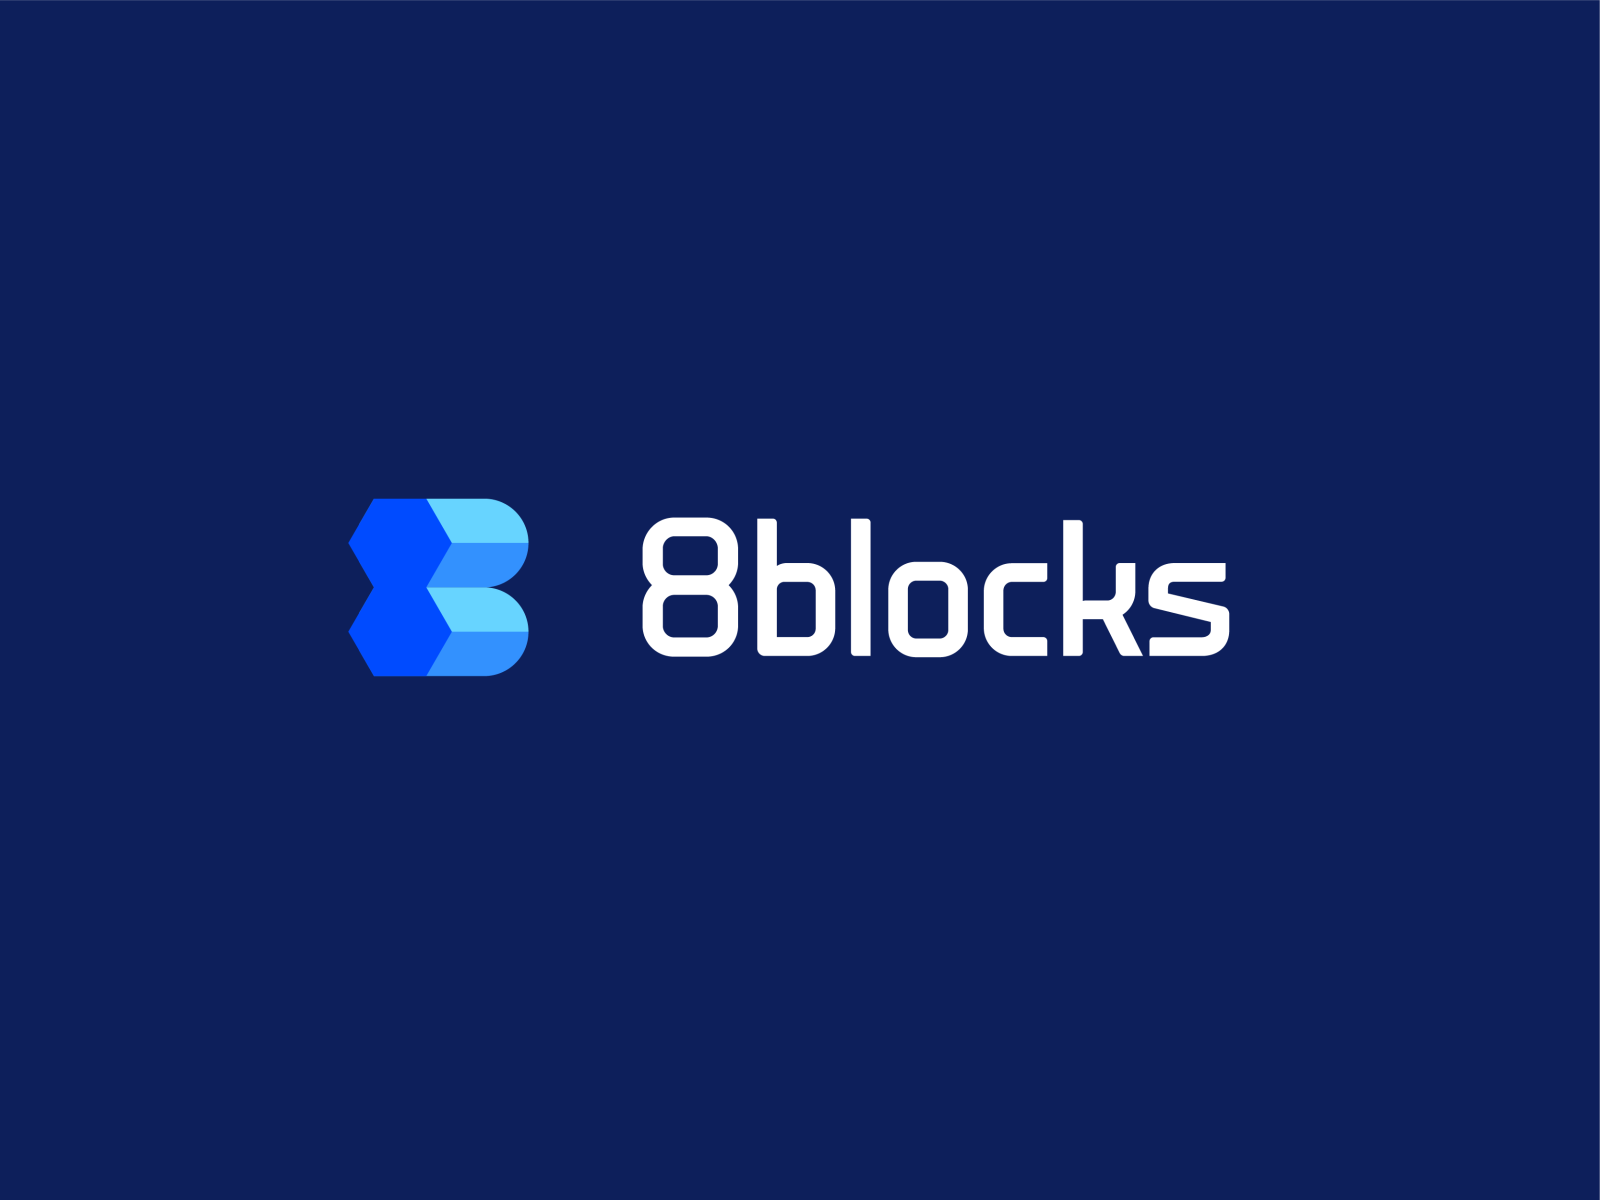 8blocks by Badr Errouichaq on Dribbble